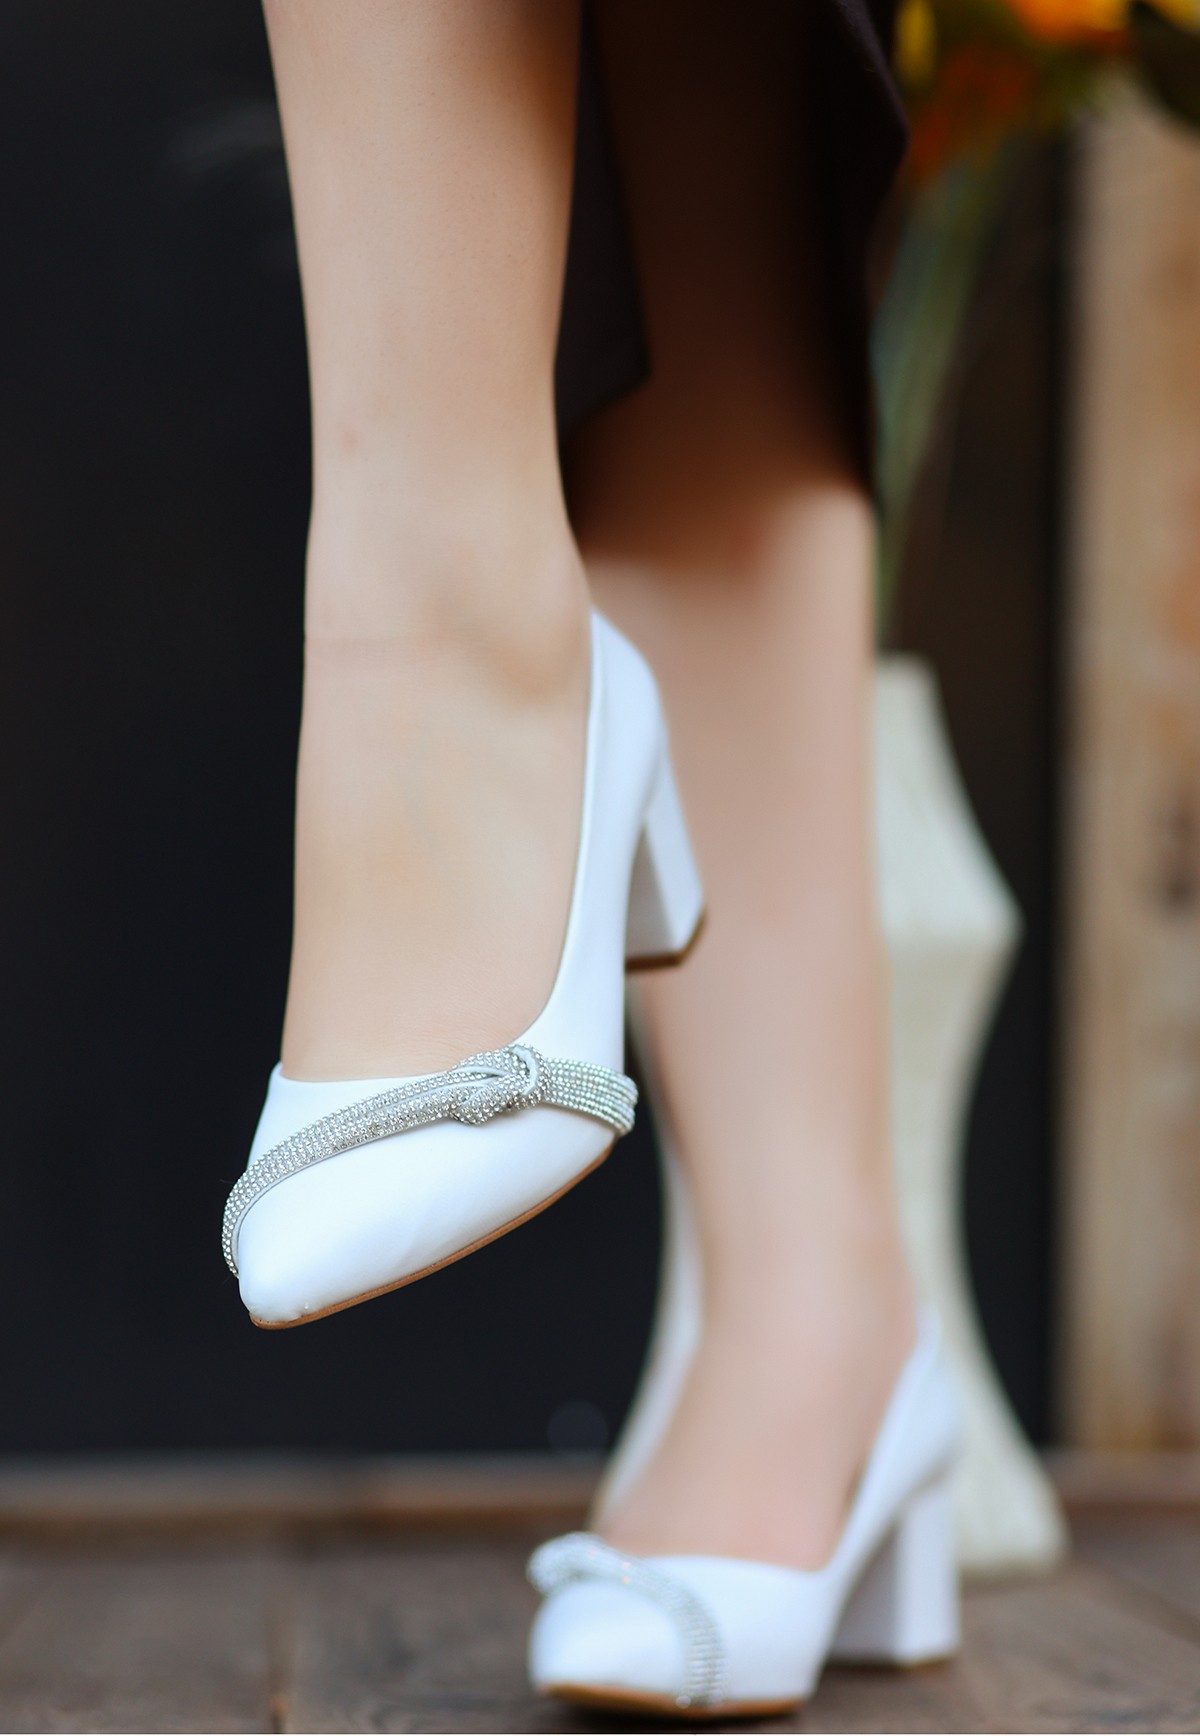 CLZ943 Beyaz Cilt Topuklu Ayakkabı